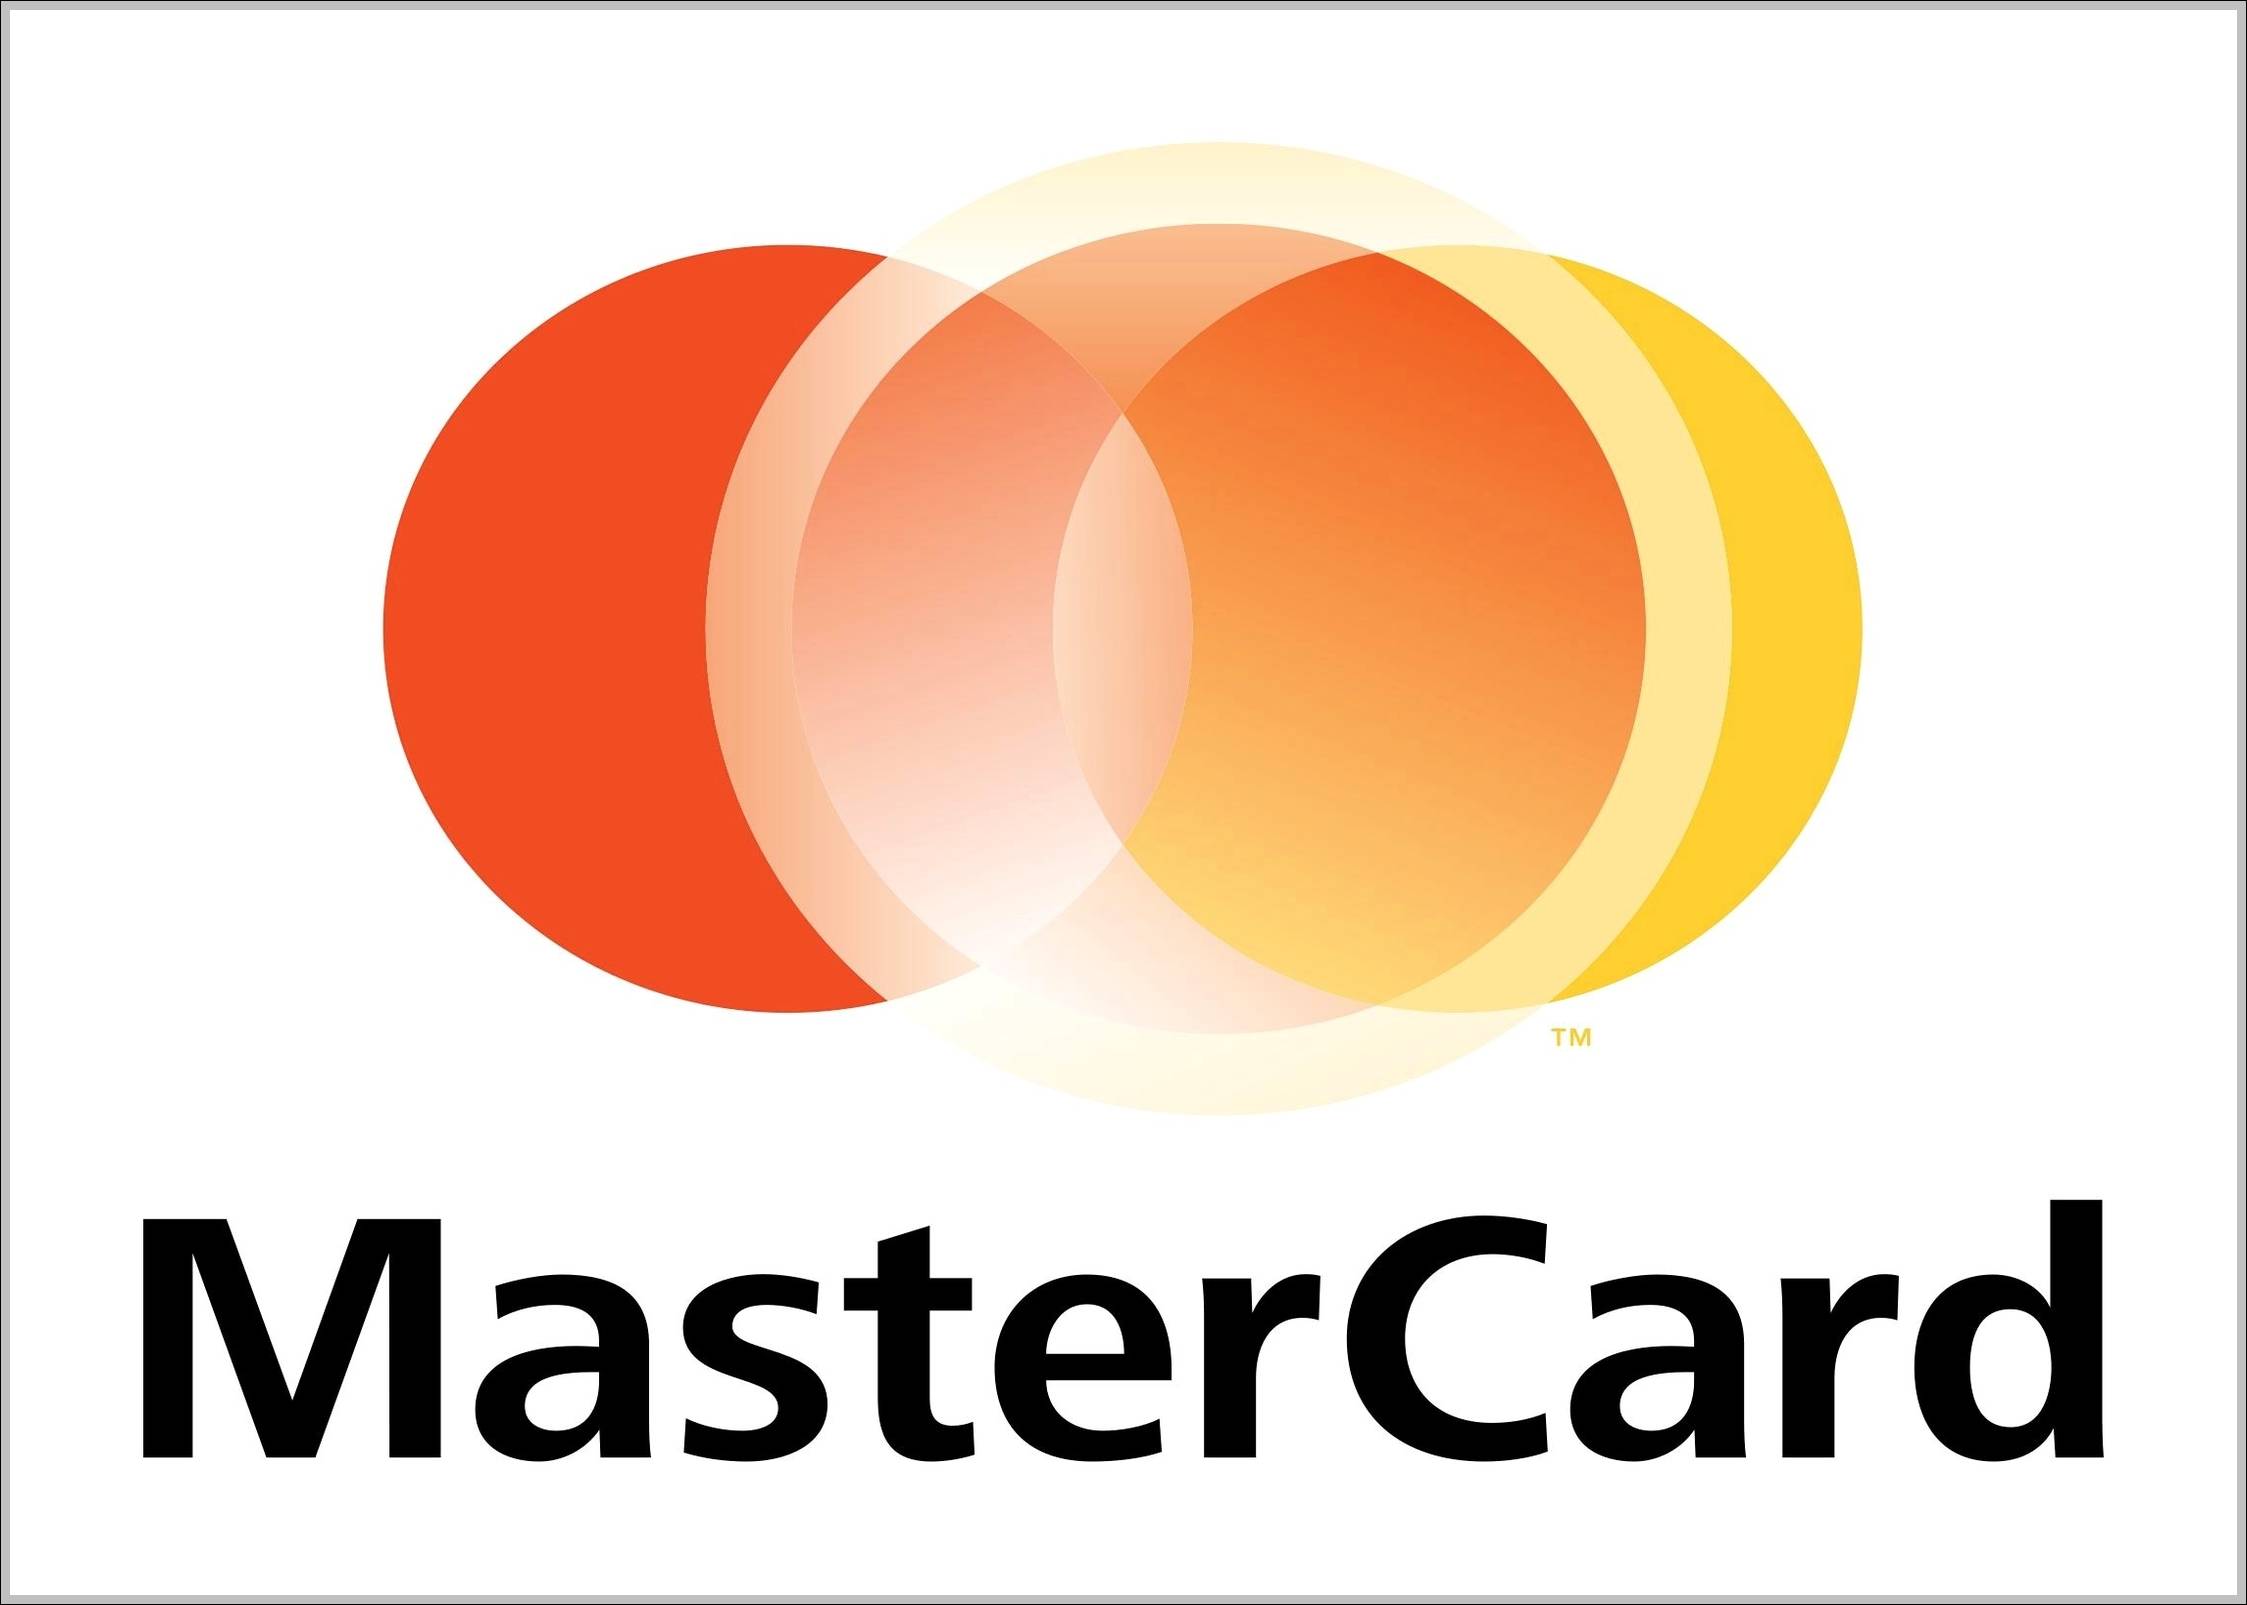 Mastercard Worldwild logo 2012